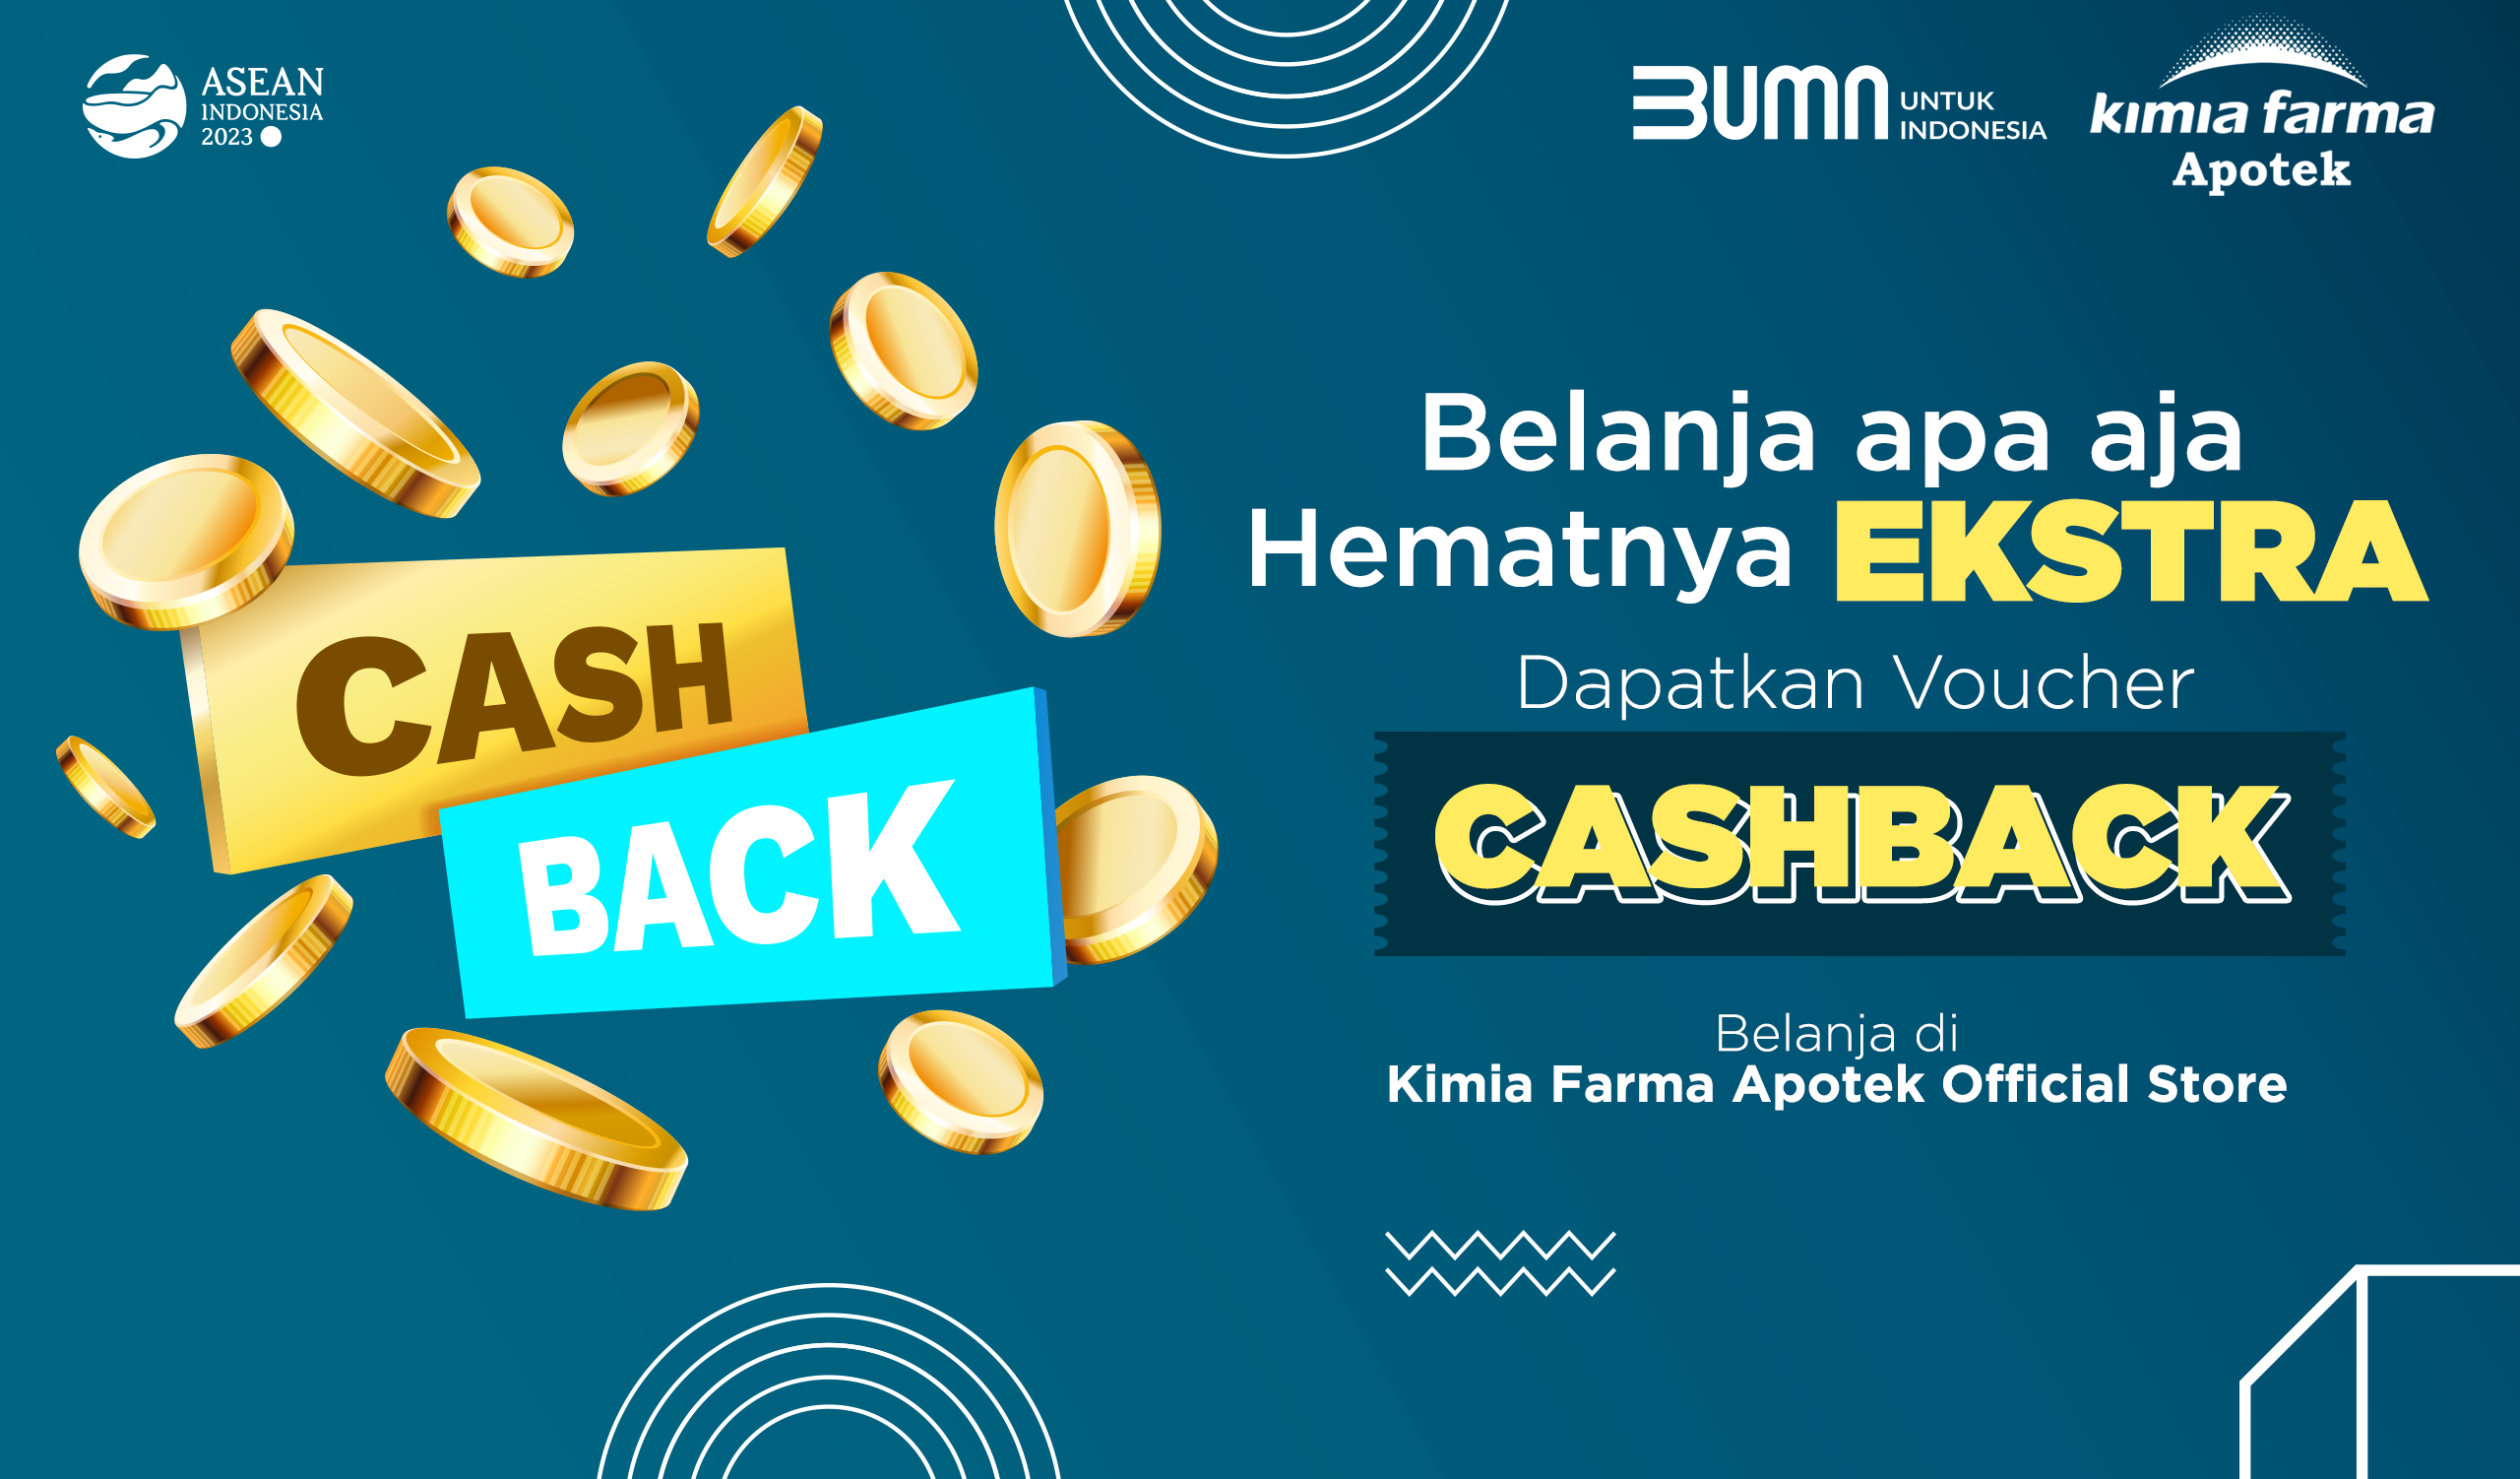 You are currently viewing Belanja apa aja Hematnya Ekstra di Kimia Farma Official Store Tokopedia!